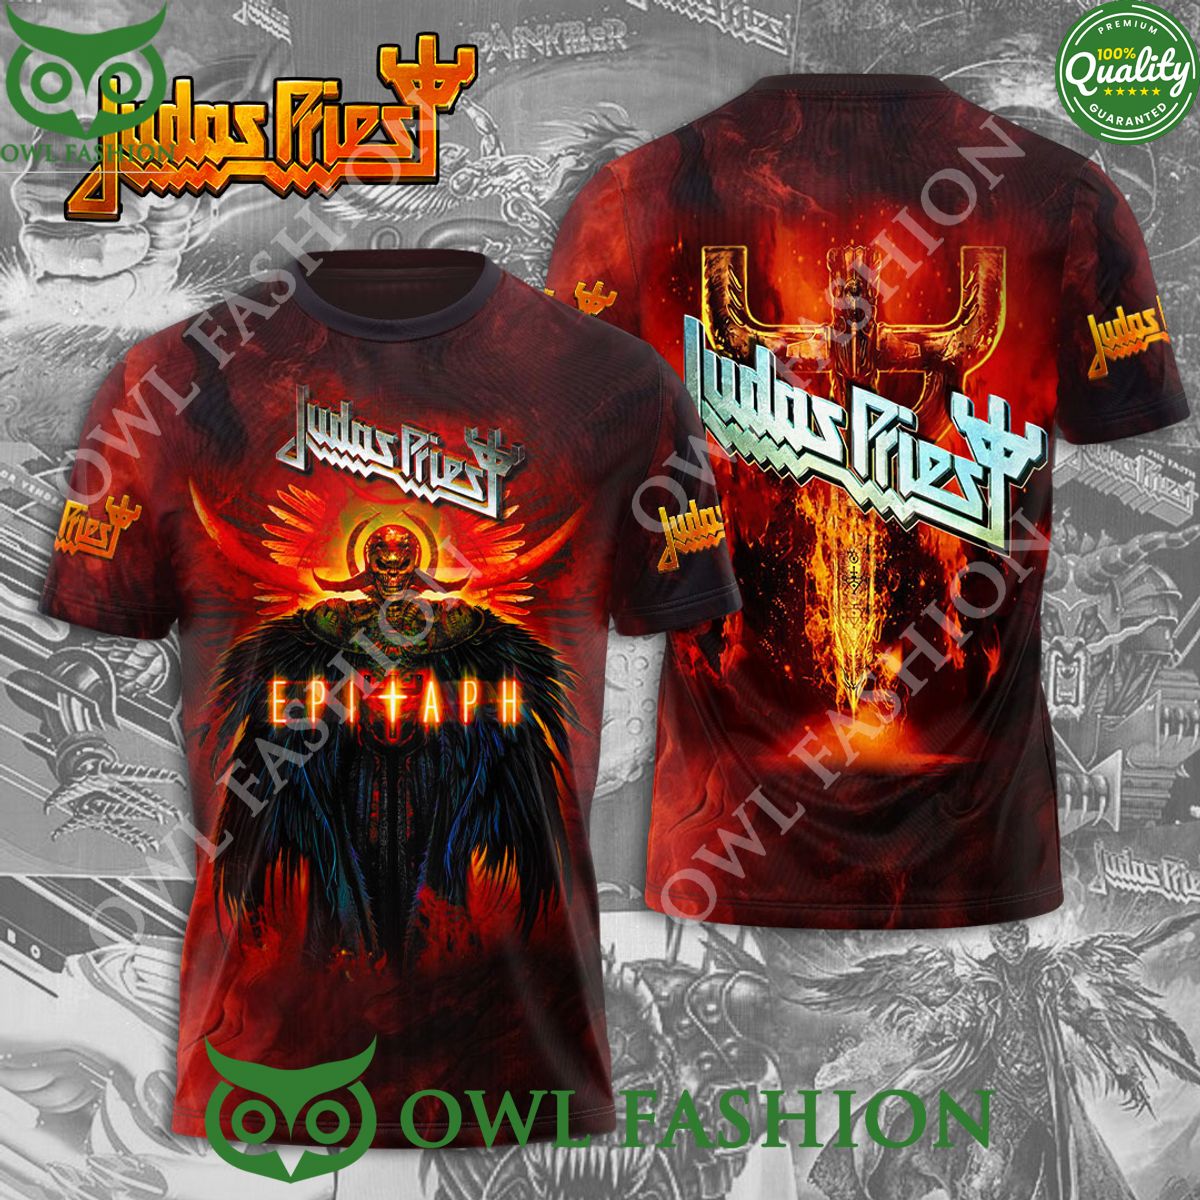 Judas Priest Epitaph Live Album 3D T shirt Handsome as usual